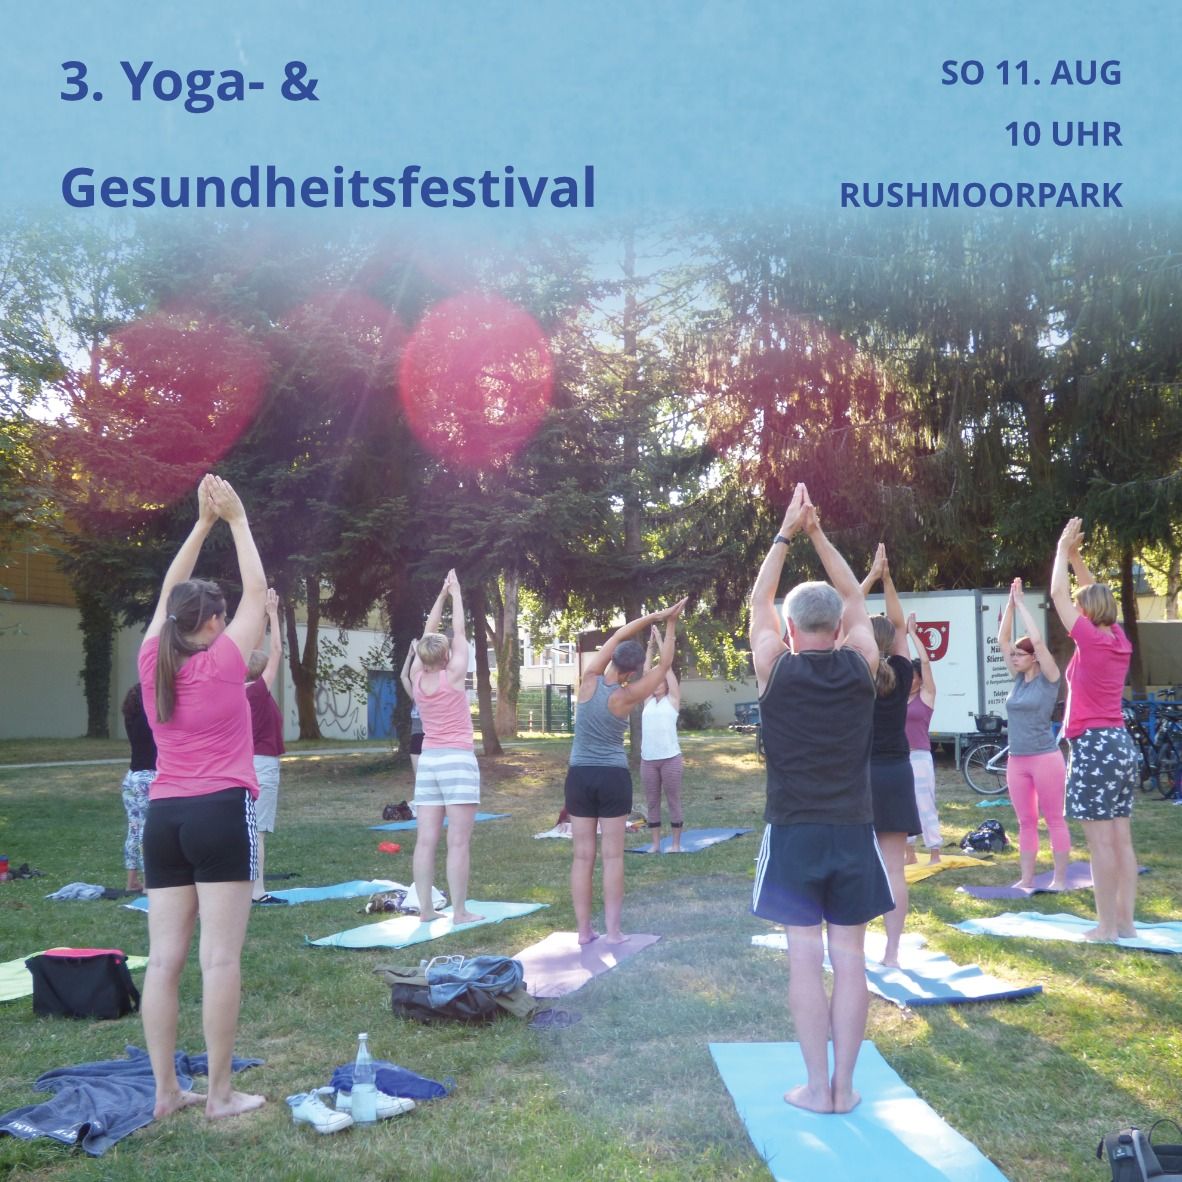 3. Yoga- & Gesundheitsfestival